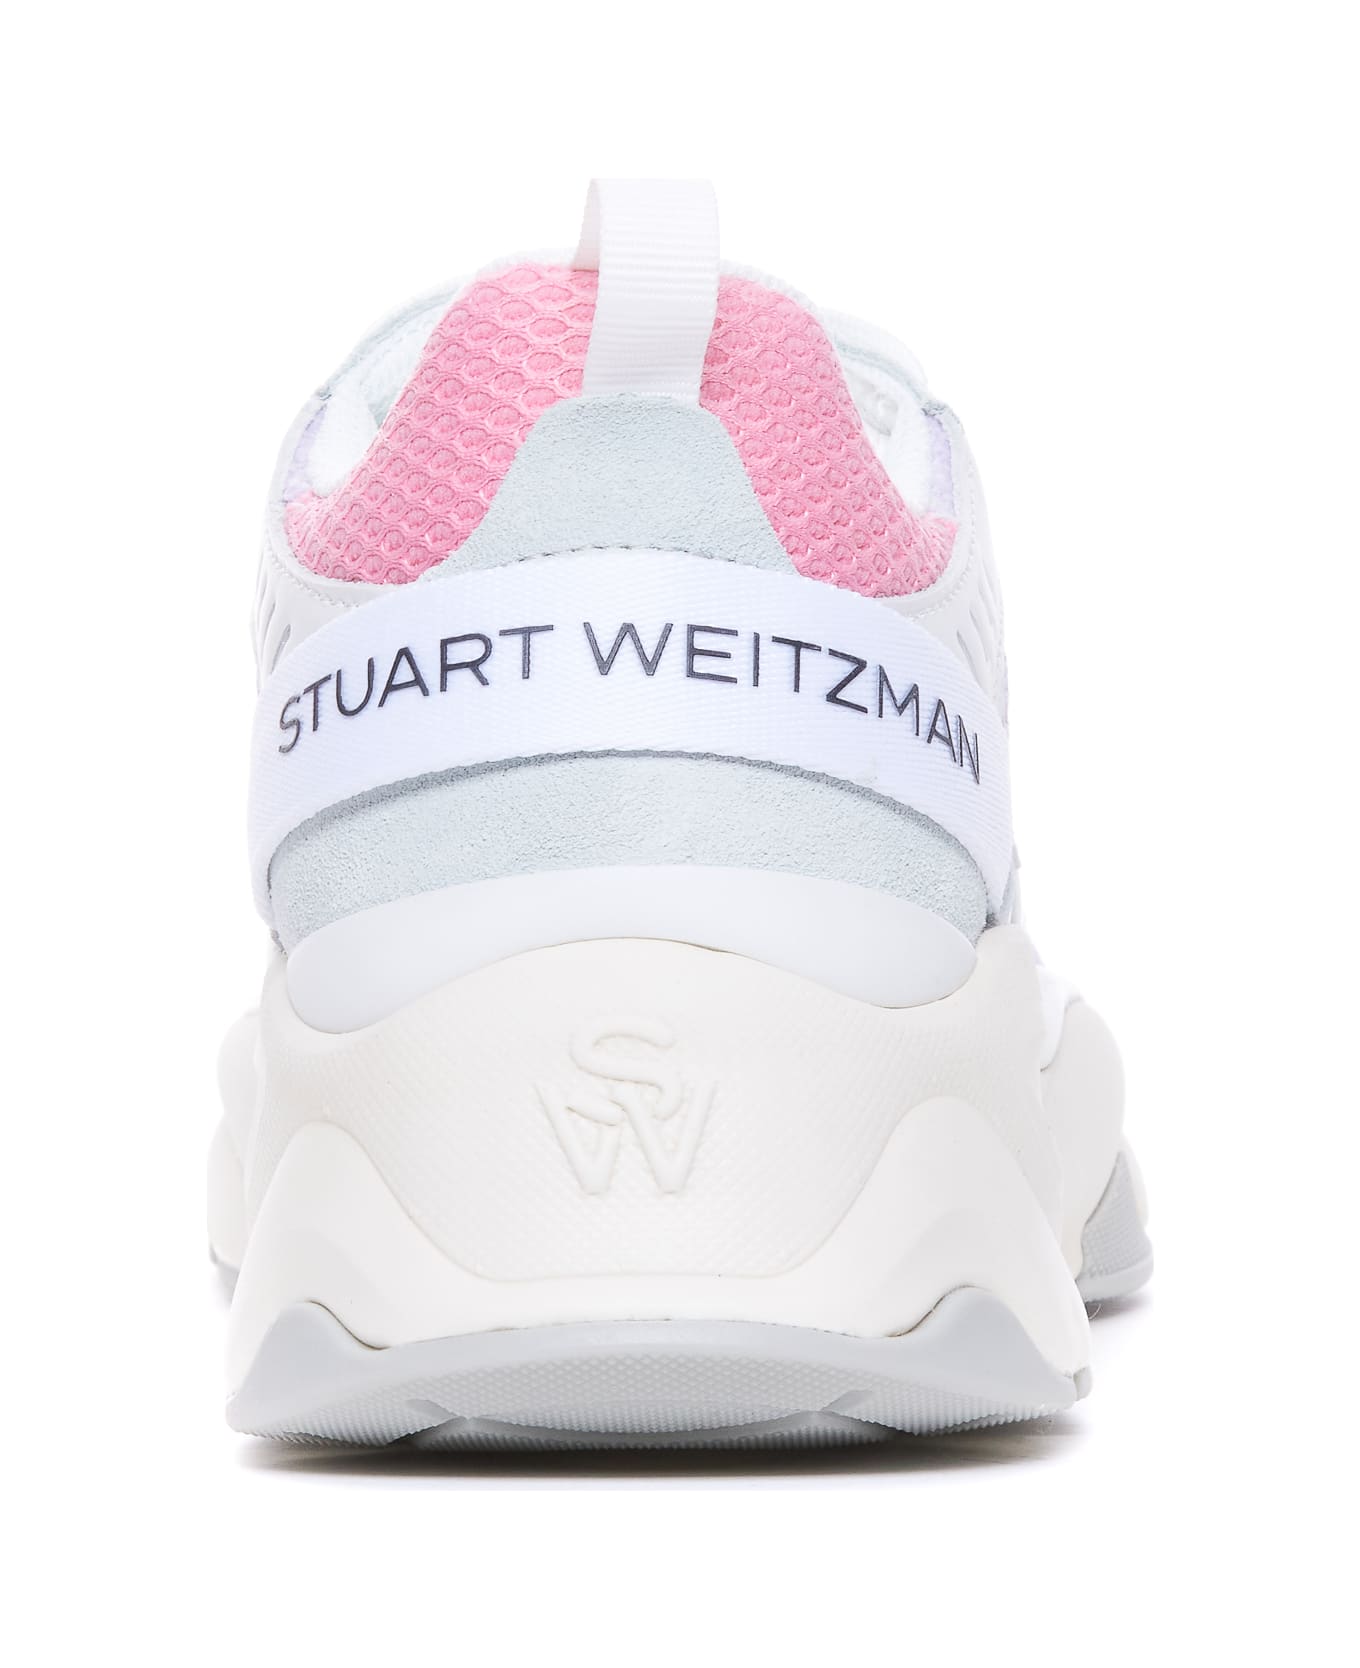 Stuart Weitzman Sw Trainer Sneakers - White スニーカー